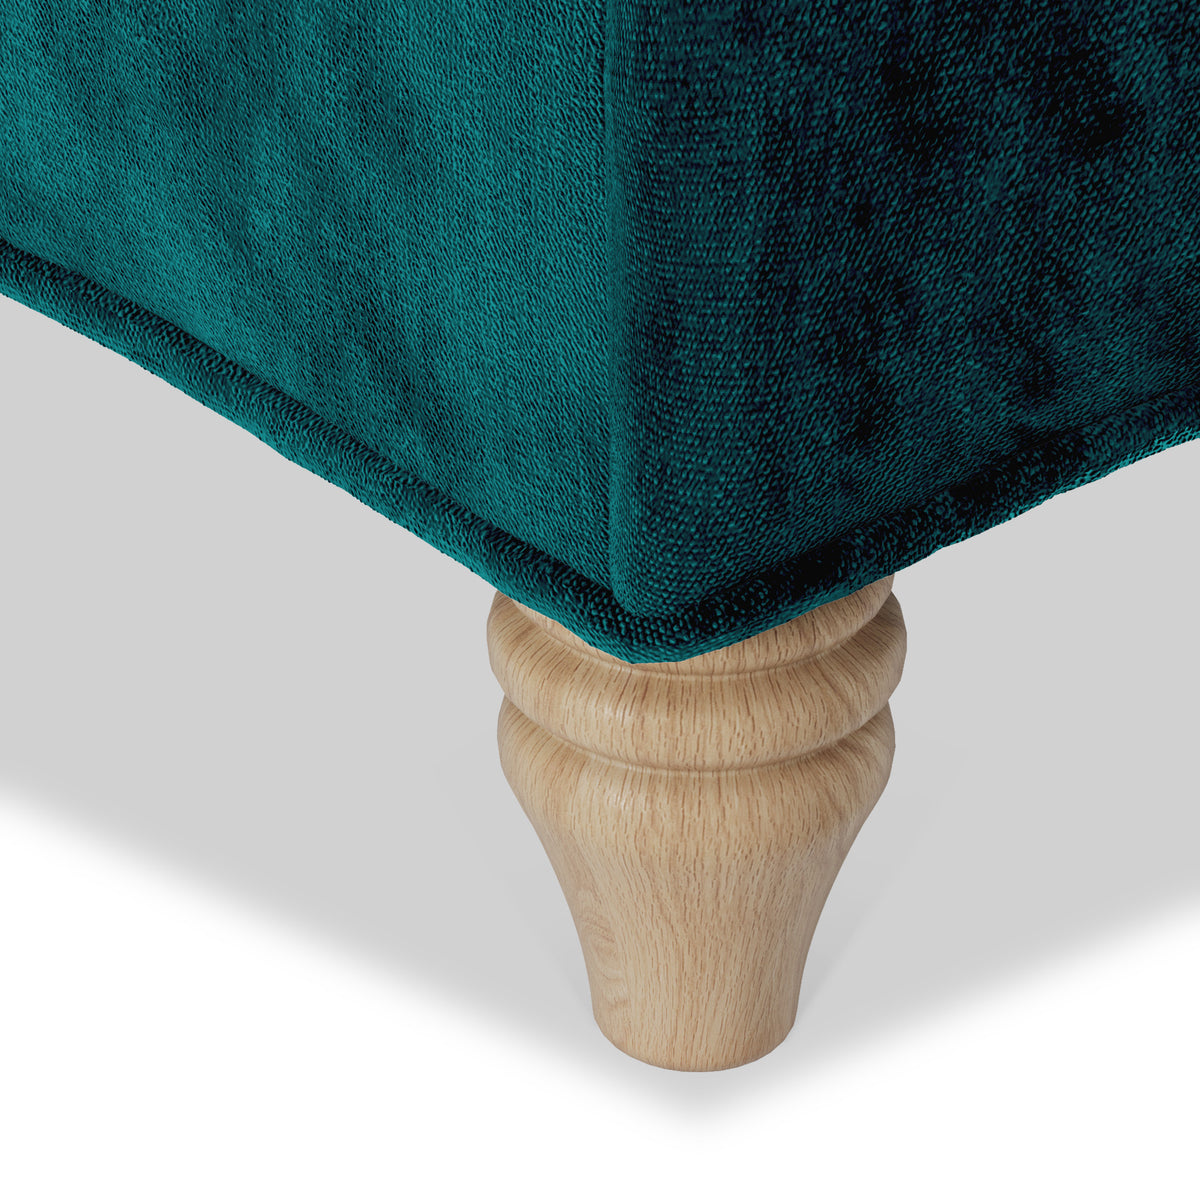 Alfie Chaise Sofa in Emerald by Roseland Furniture